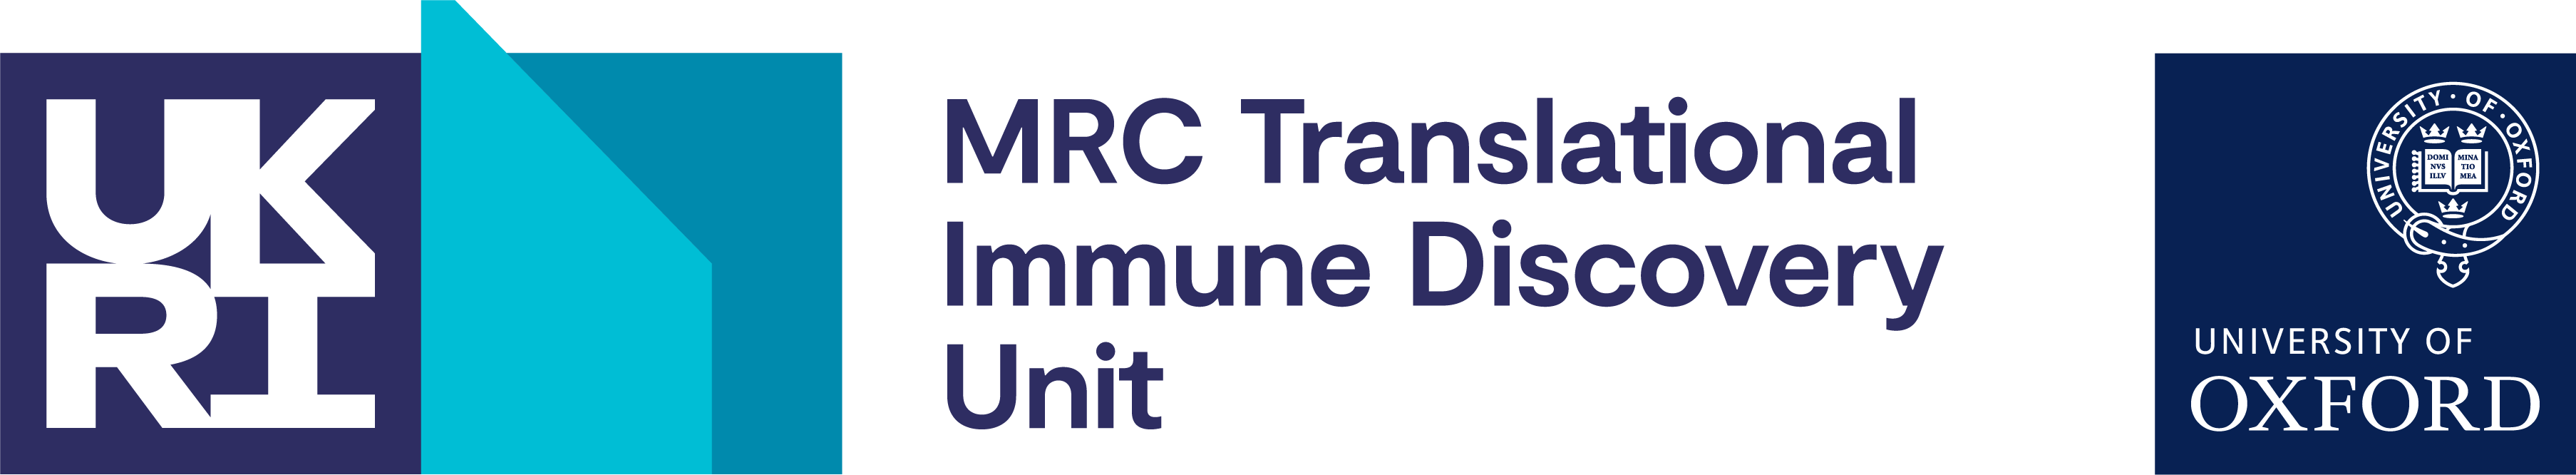 MRC TIDU logo